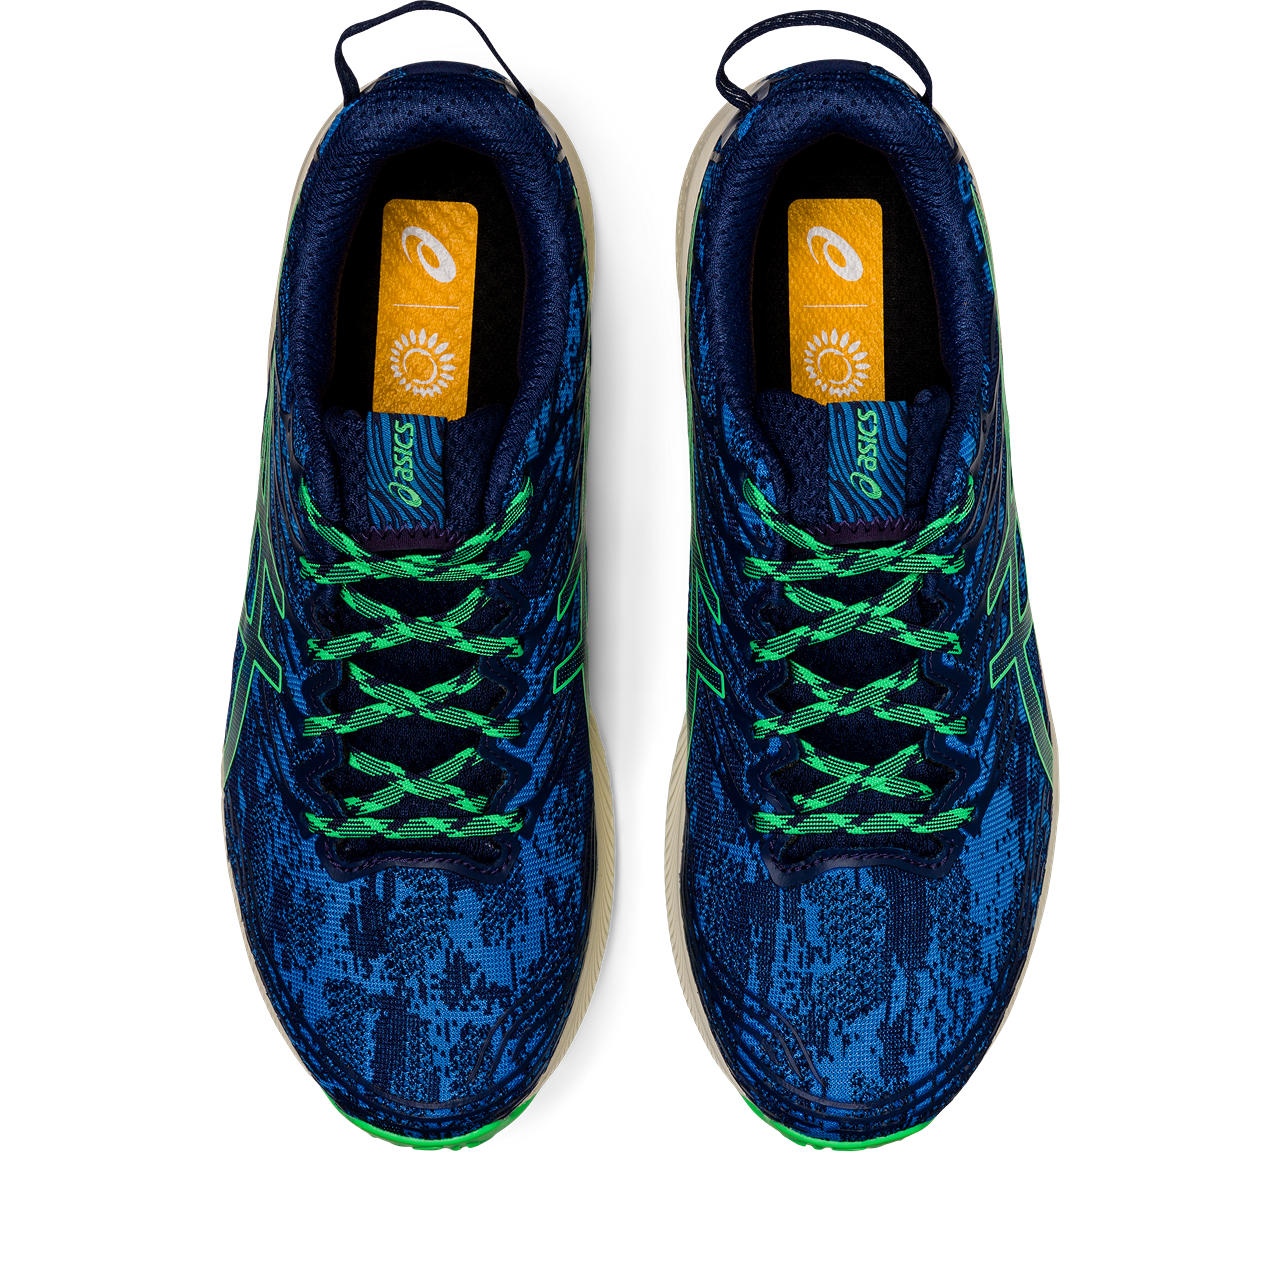 Lite - 3 coast/new Trailrunning BIKE24 asics | Fuji leaf Men Shoes blue